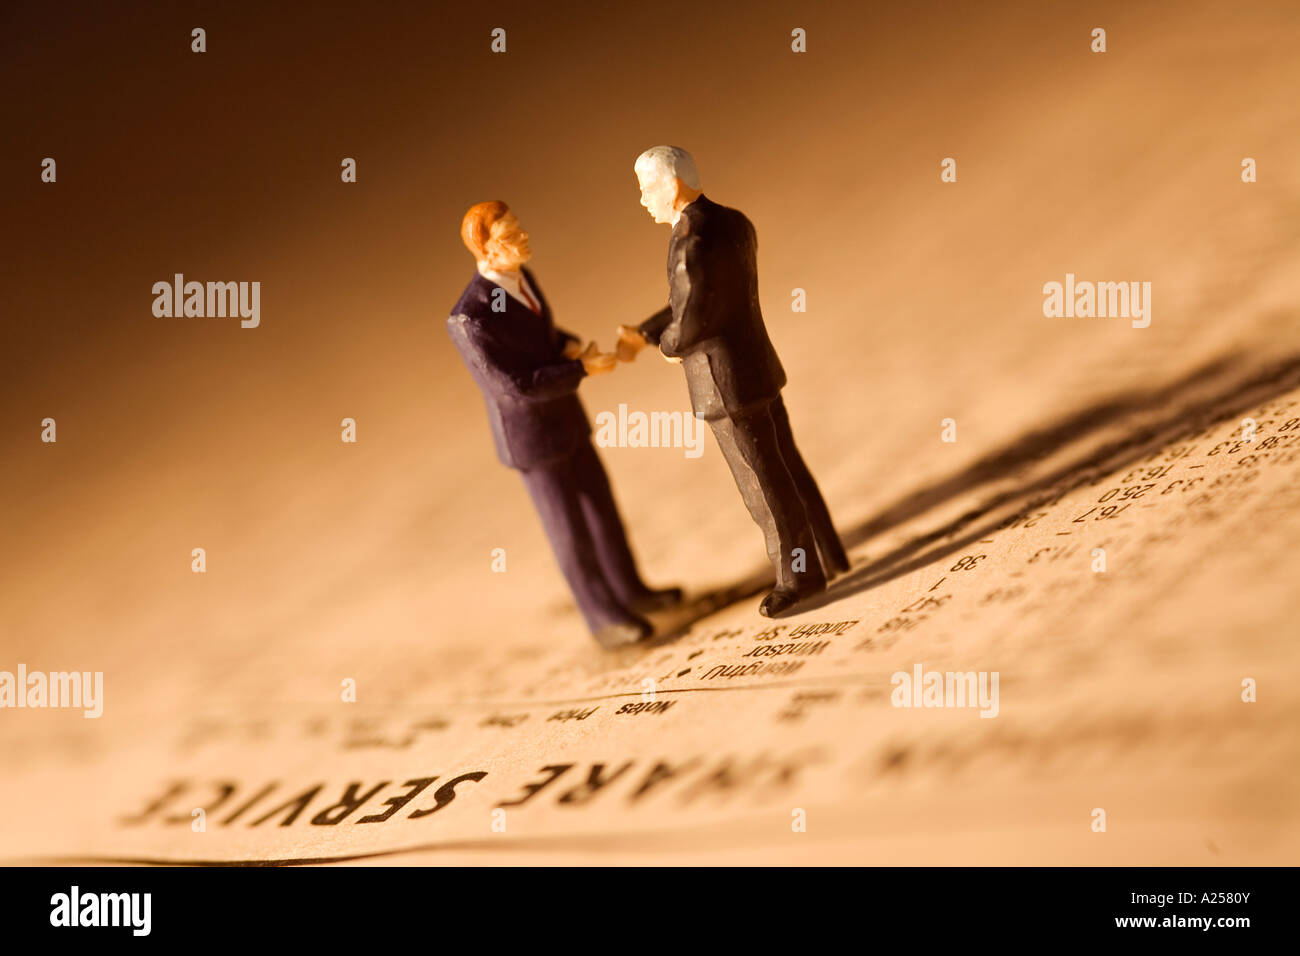 Miniature businessmen shake hands standing on financial newspaper Stock Photo